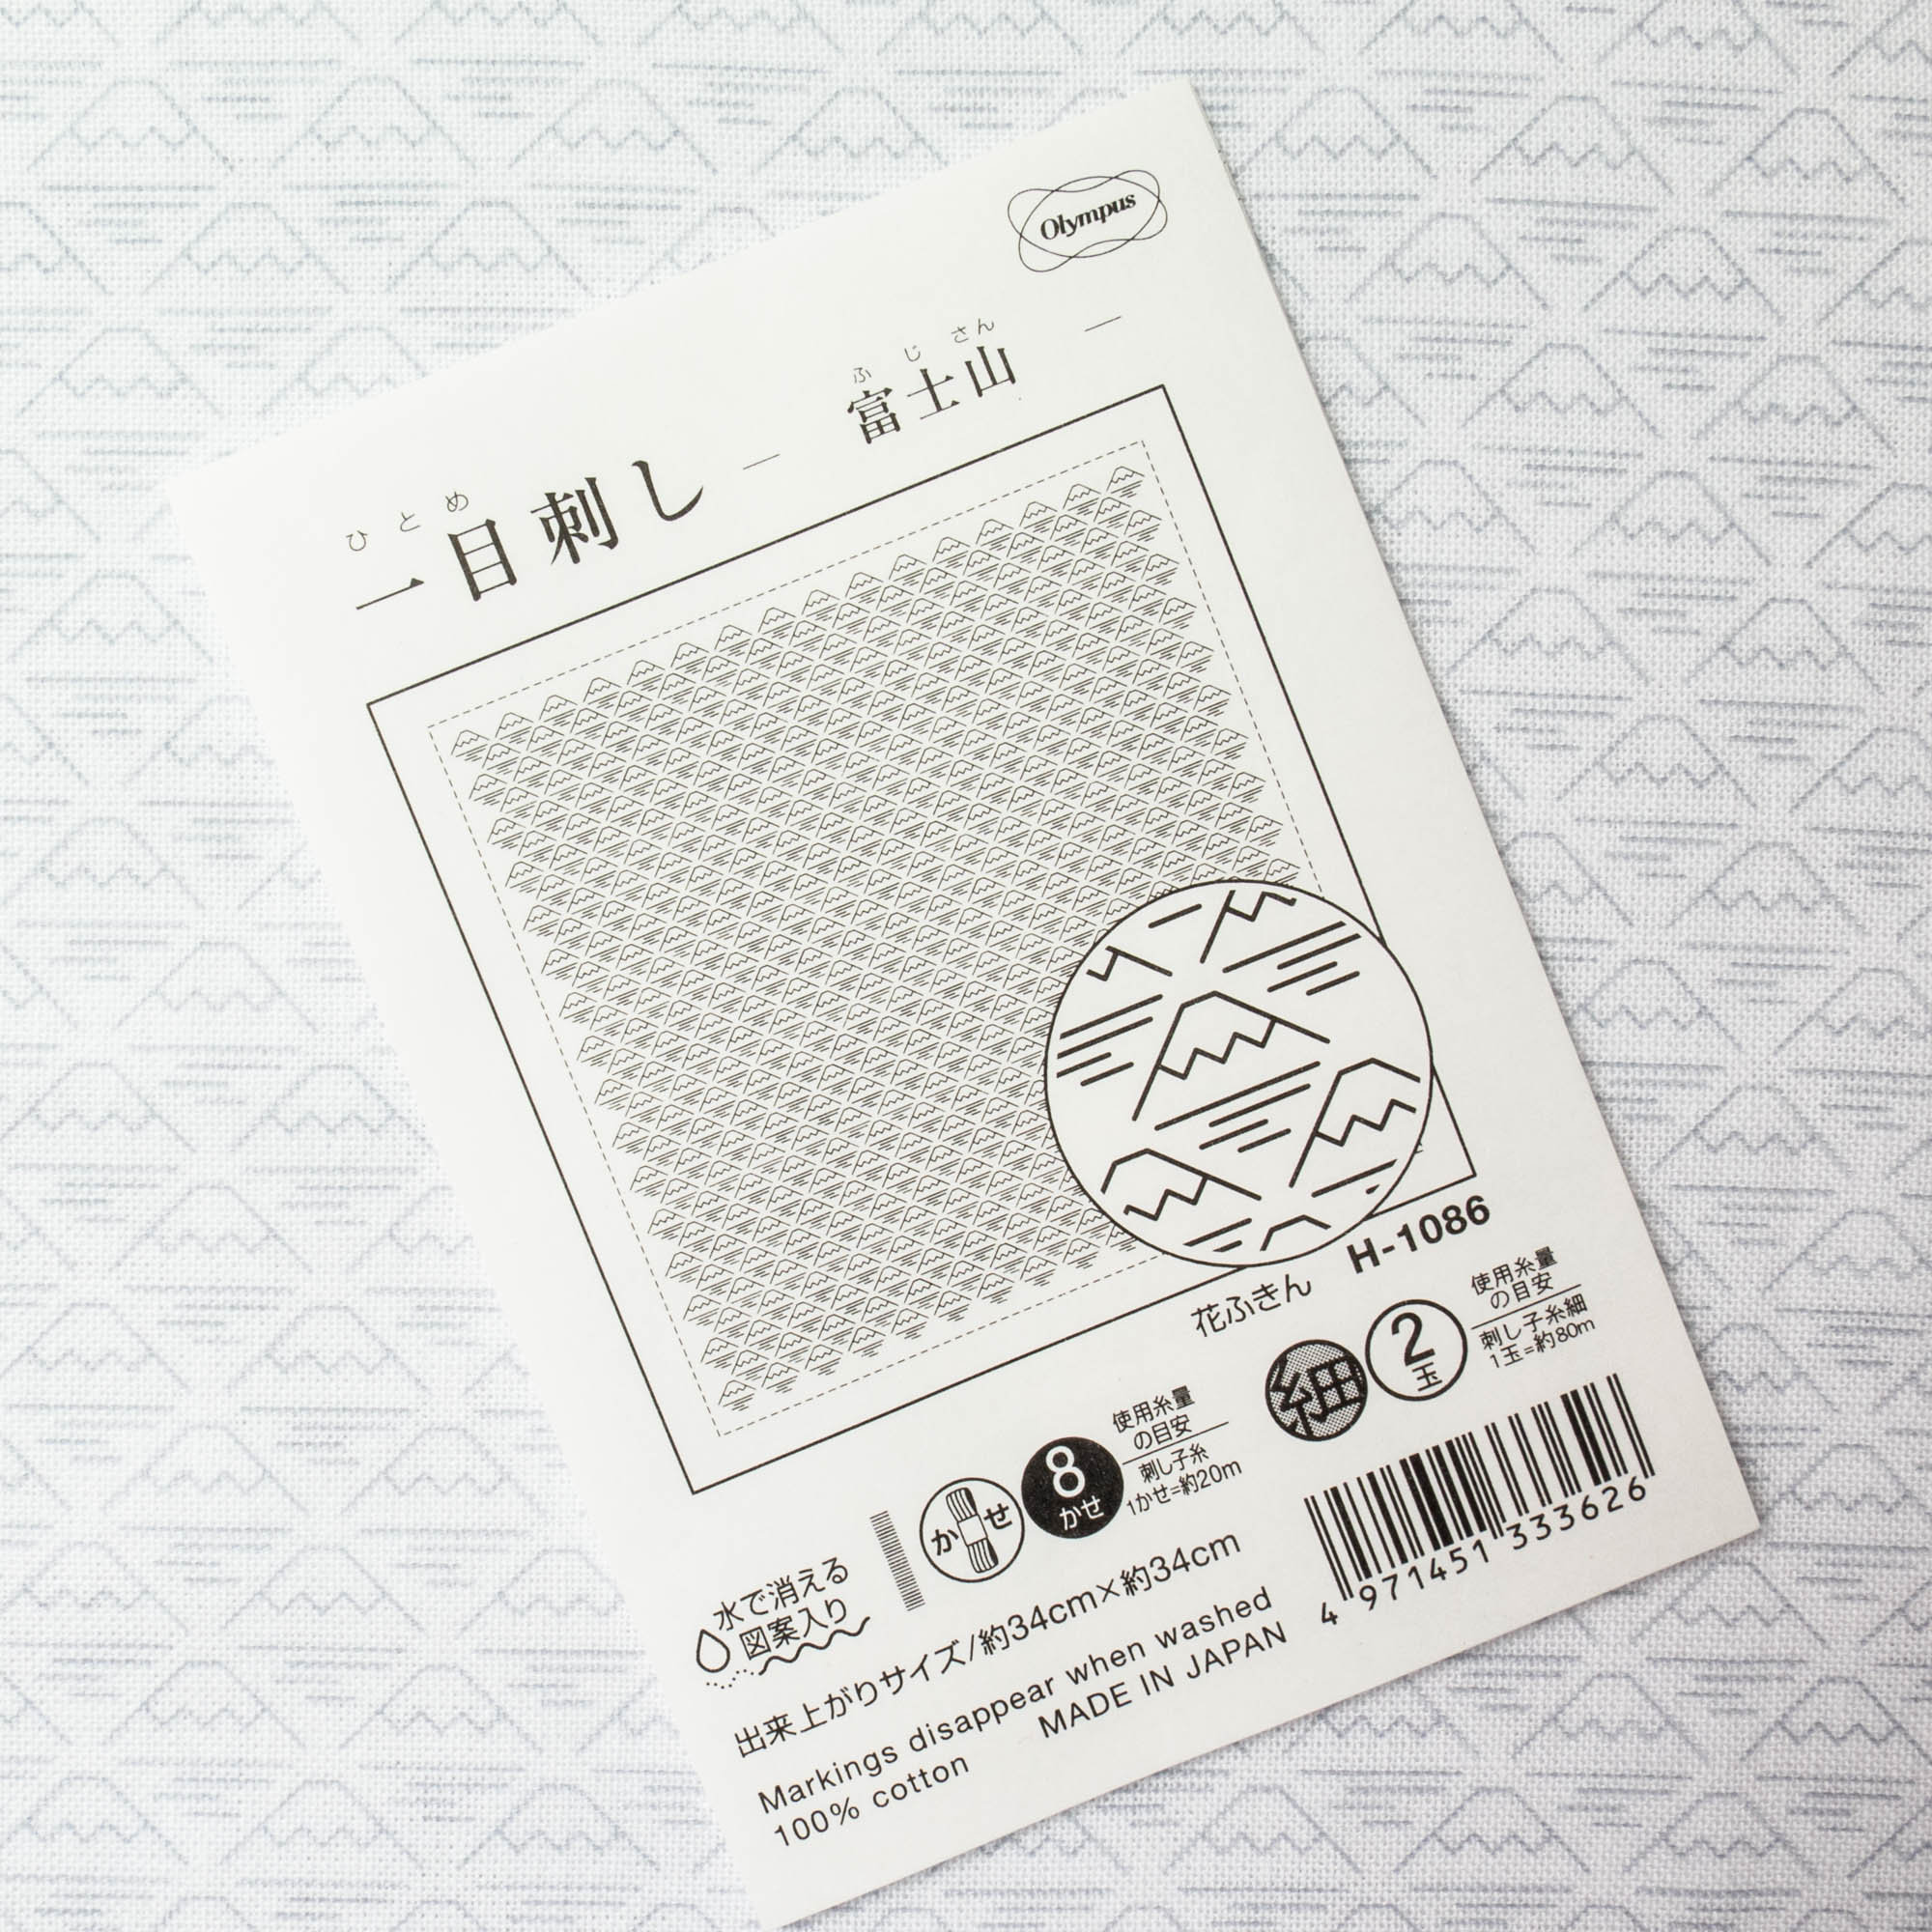 Metallic Embroidery Floss  Cosmo Nishikiito White (22) – Snuggly Monkey